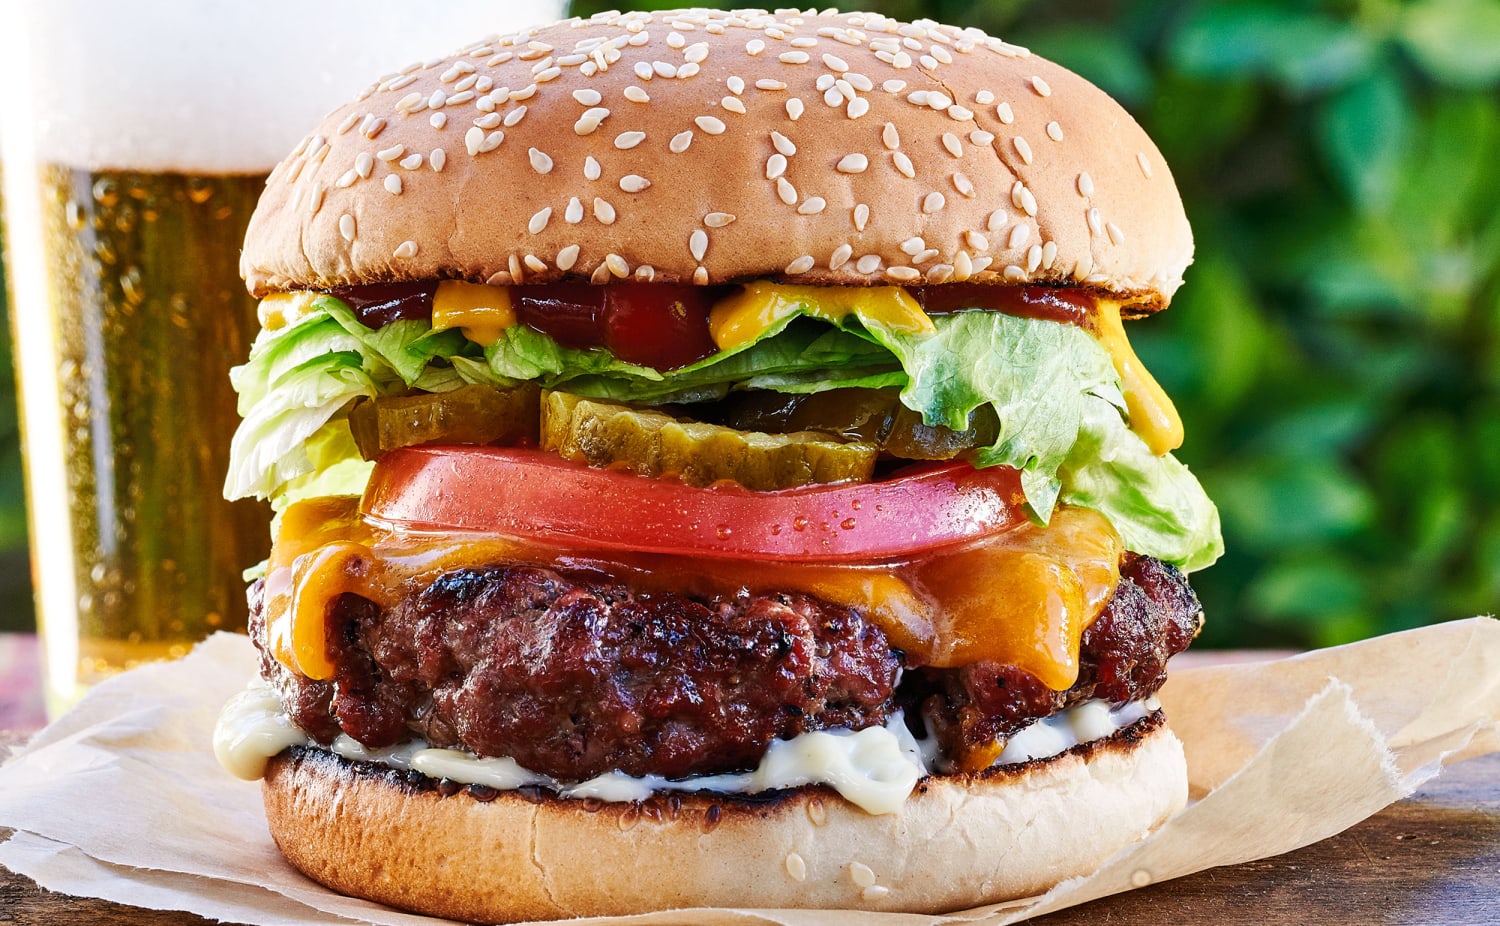 Qu'est-ce qu'on mange aujourd'hui? - Page 19 190524-classic-american-cheeseburger-ew-207p